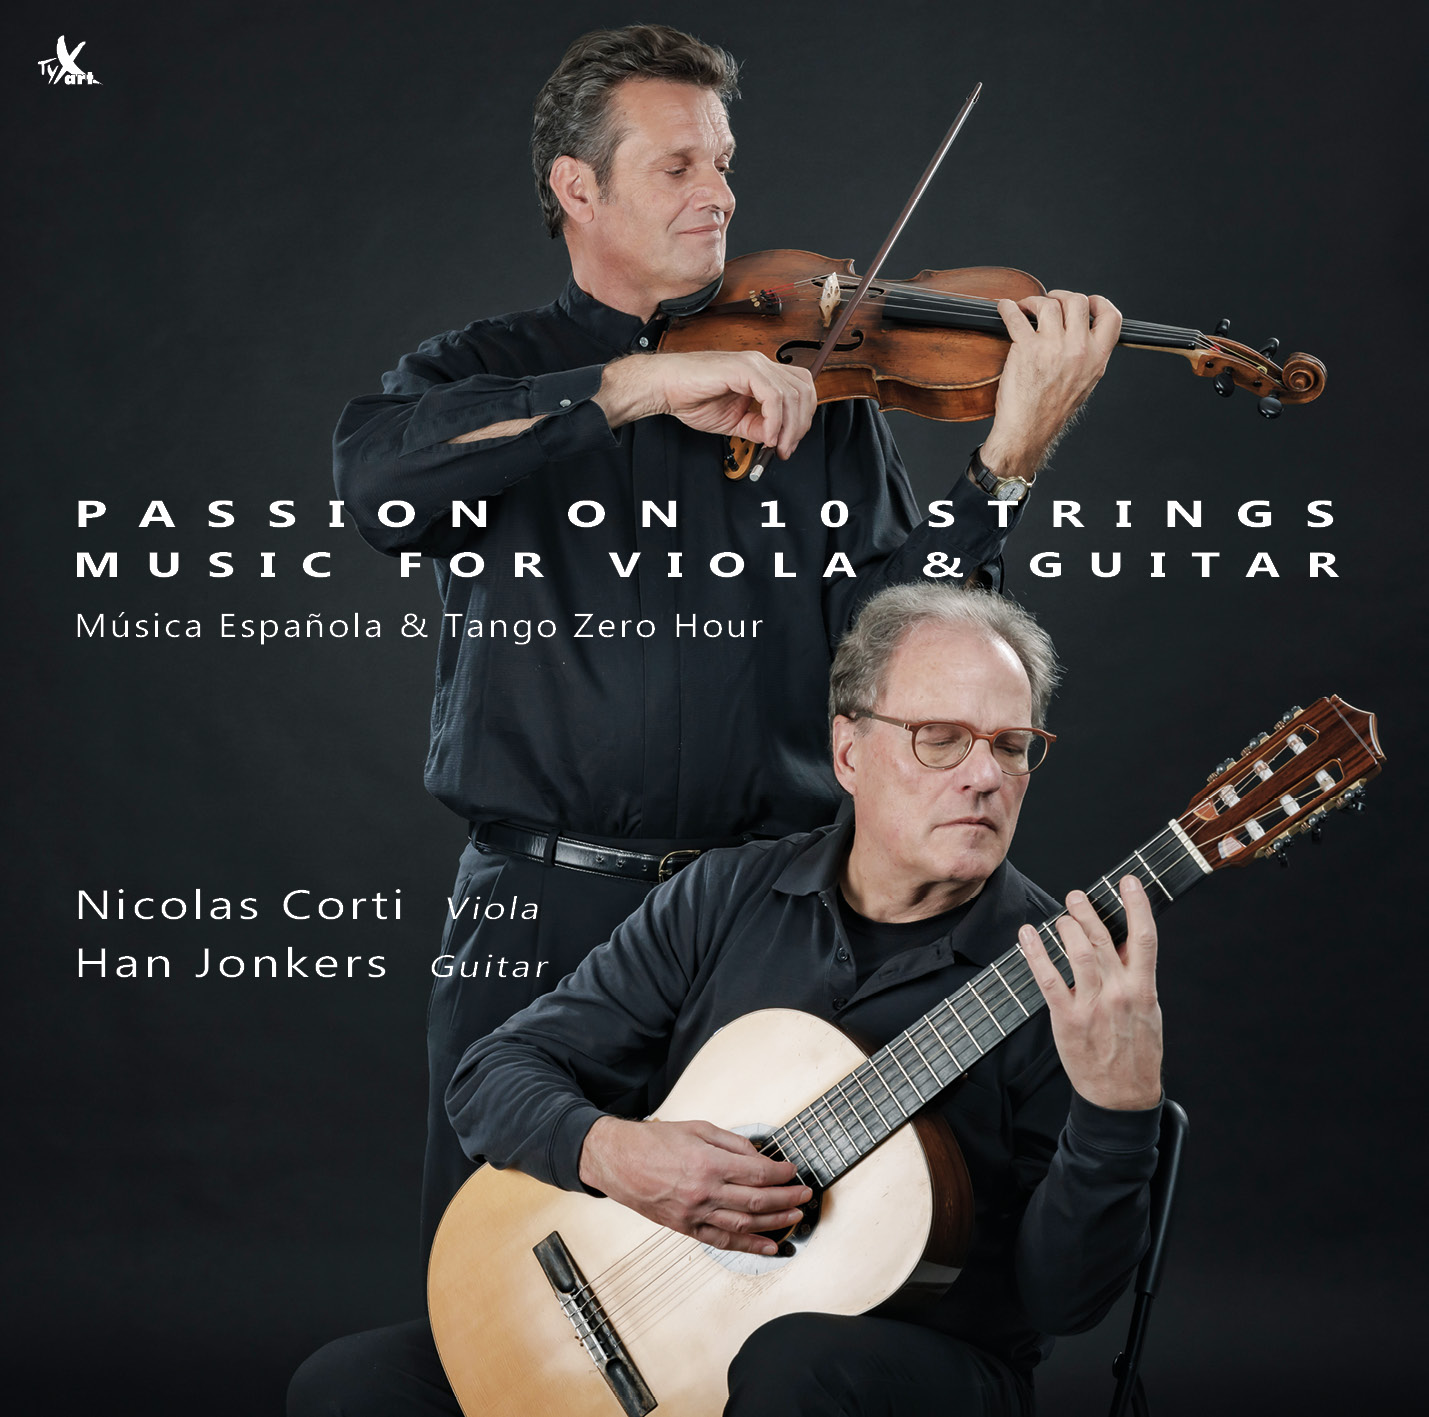 Passion on 10 Strings - Music for Viola & Guitar - Nicolas Corti & Han Jonkers